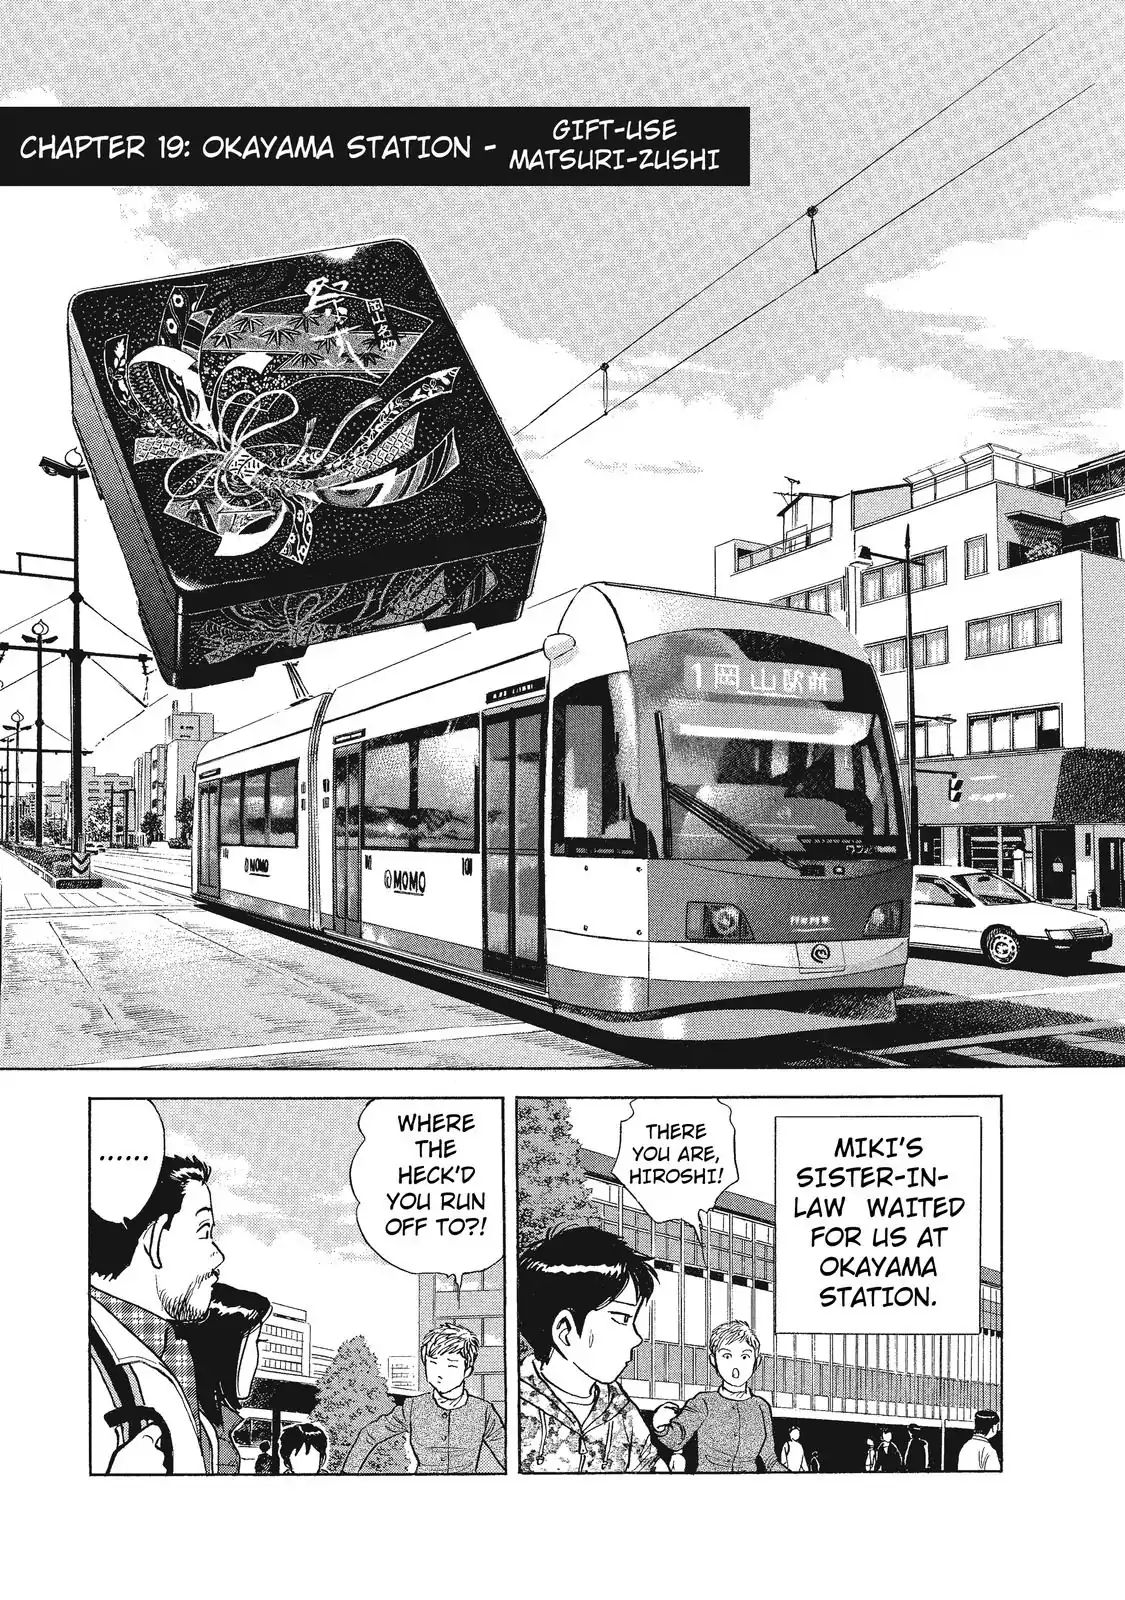 Ekiben Hitoritabi Vol.2 Chapter 19: Okayama Station Gift-use Matsuri-zushi